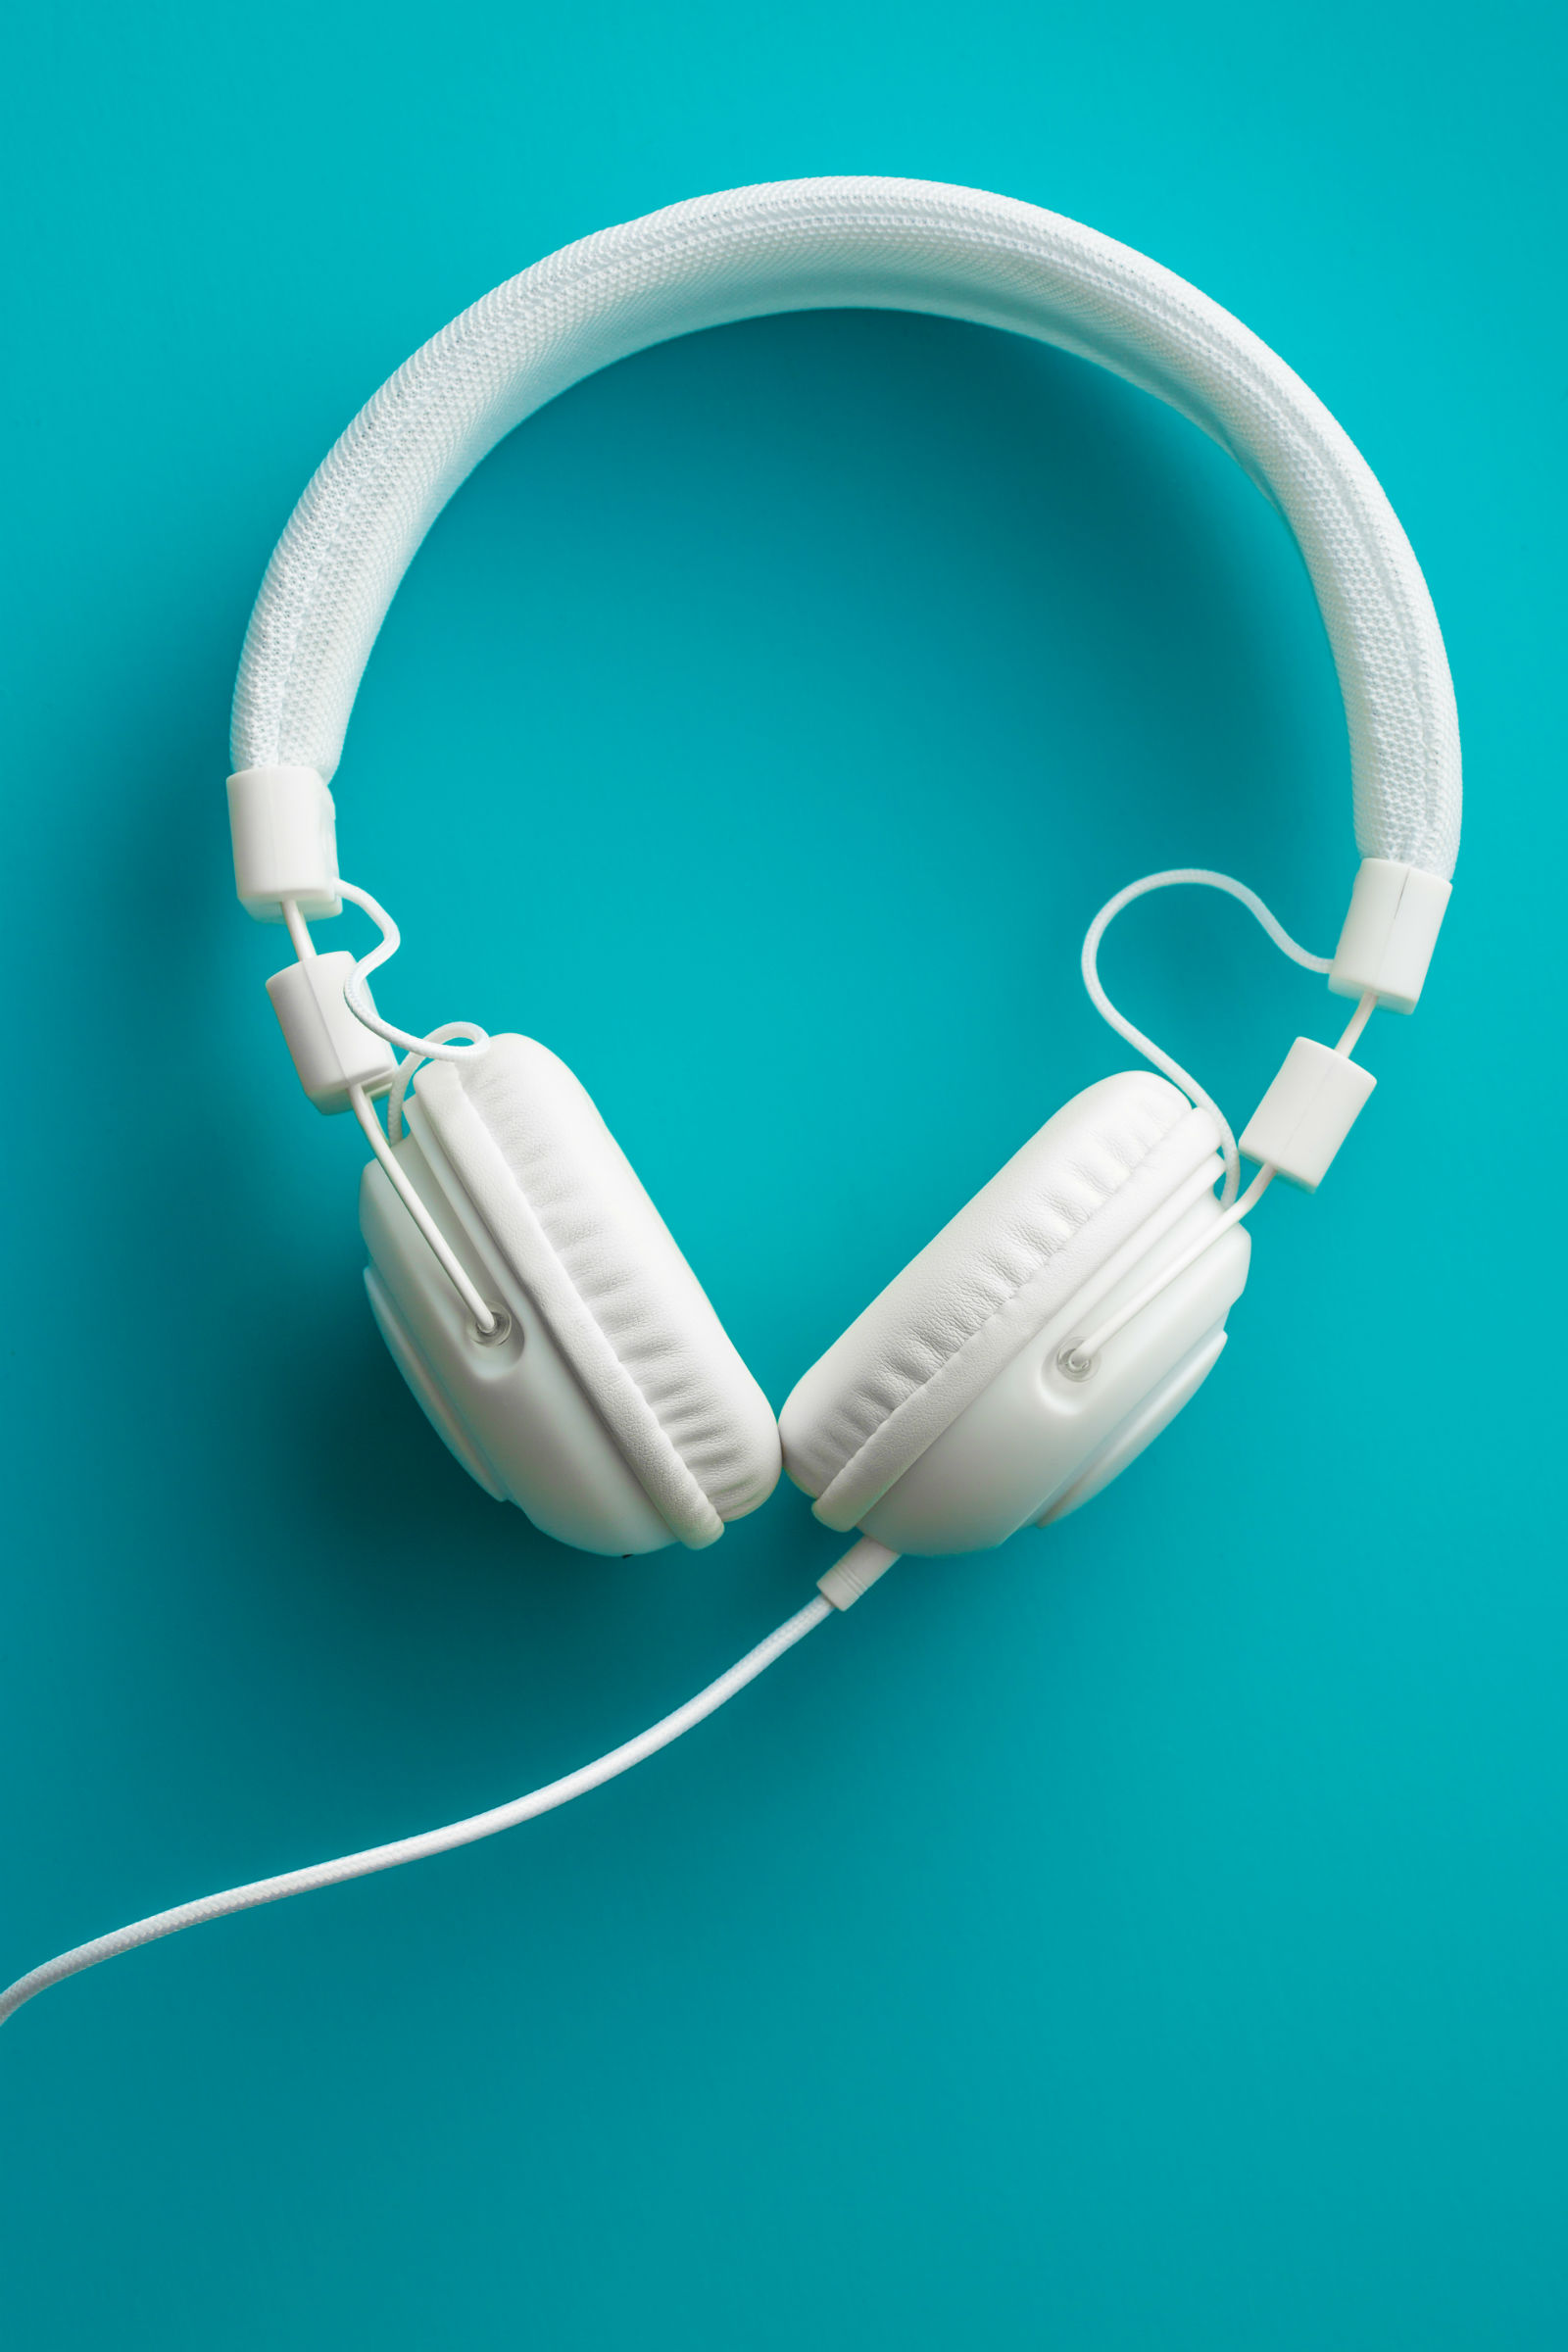 white-vintage-headphones-p3bf8an-w2400-h2400